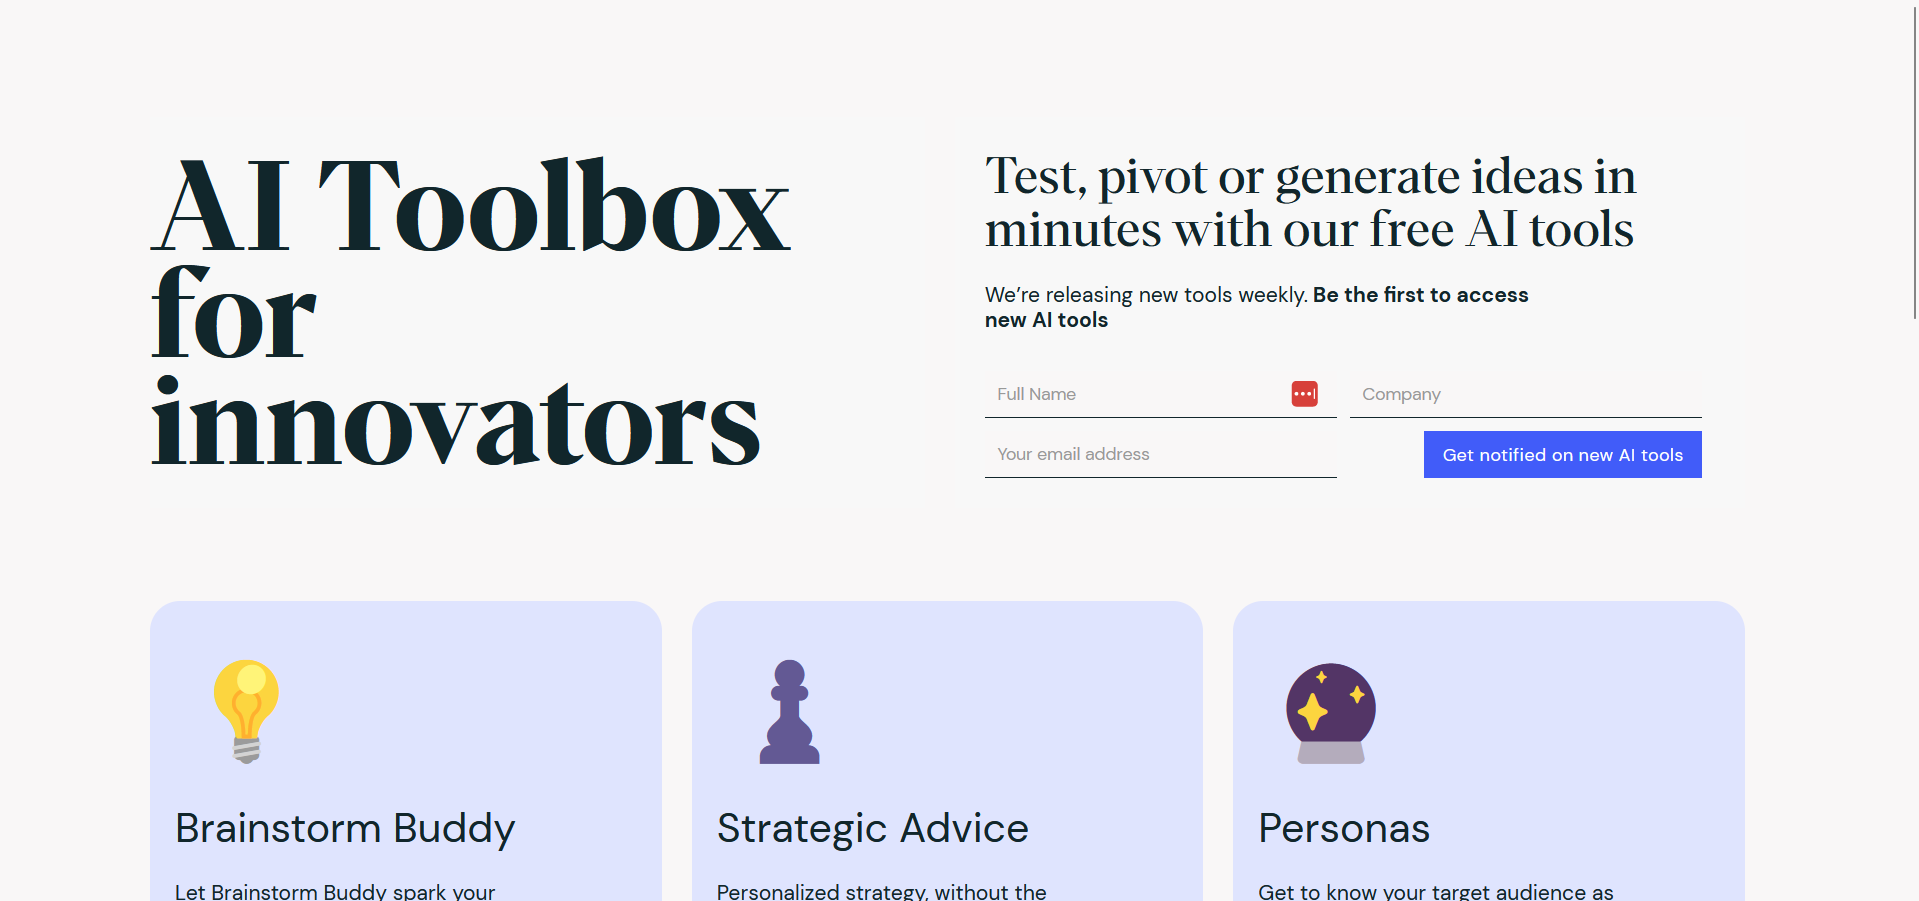 Post: AI Toolbox for Innovators